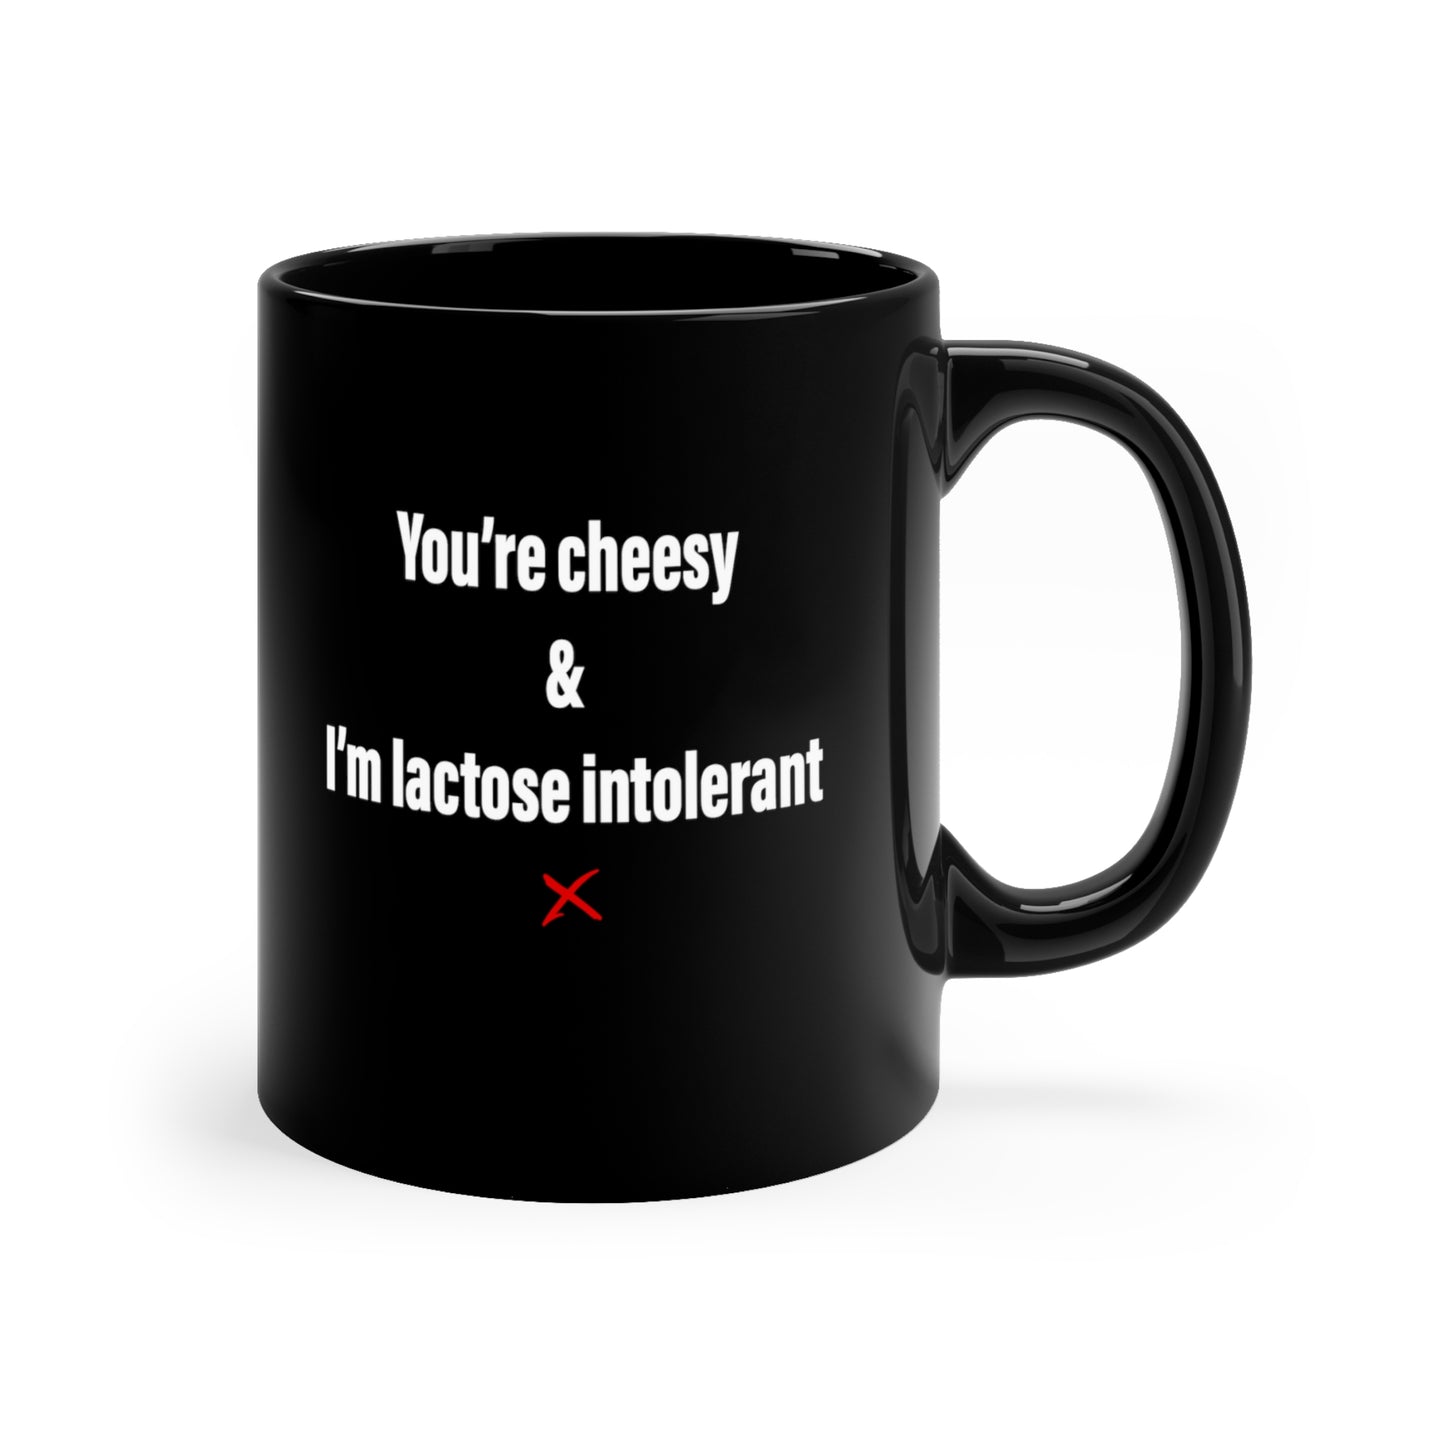 You're cheesy & I'm lactose intolerant - Mug